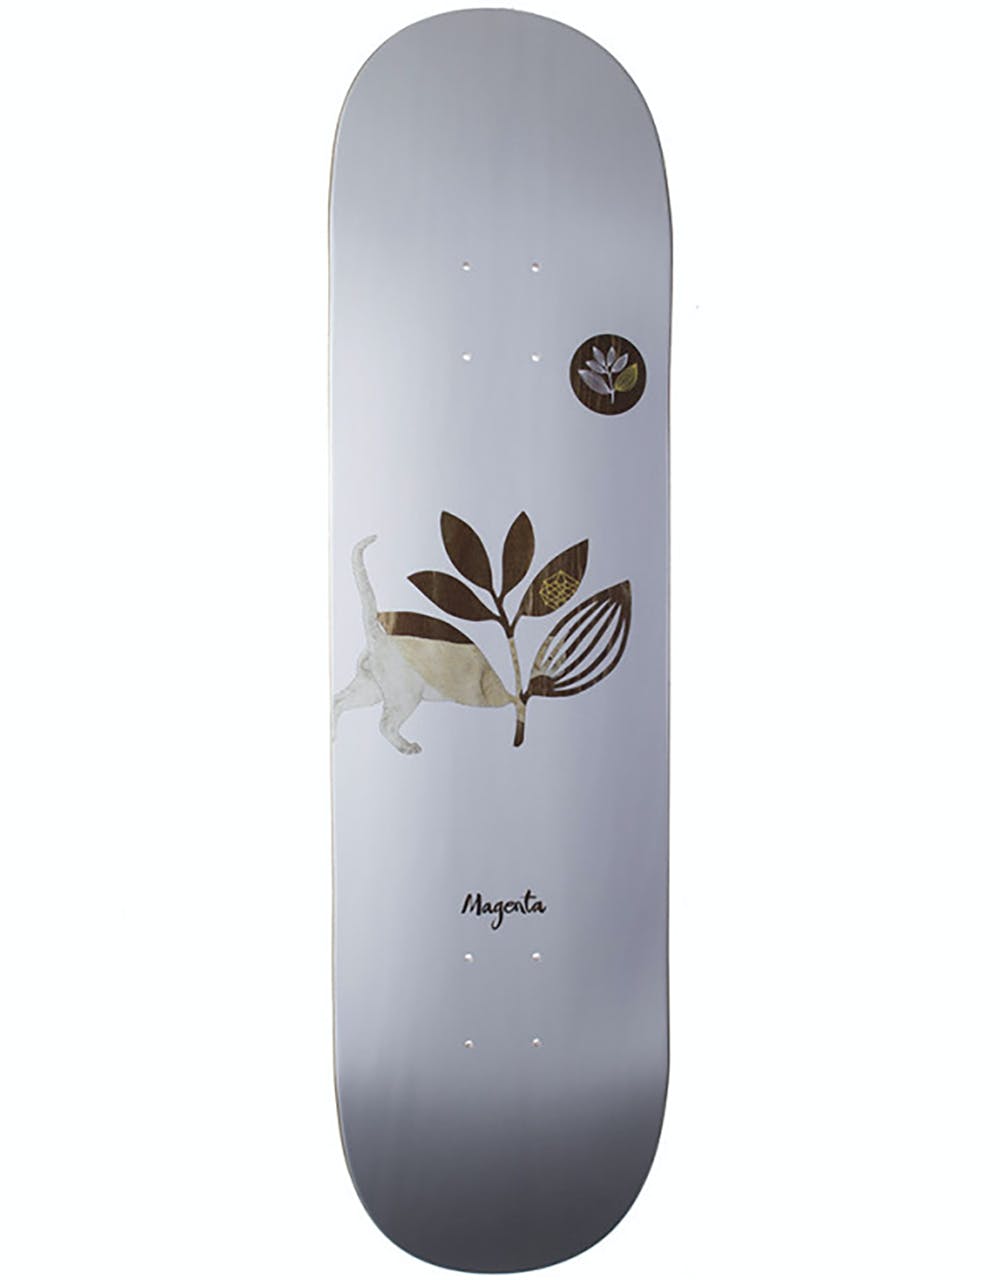 Magenta Cat Skateboard Deck - 7.875"